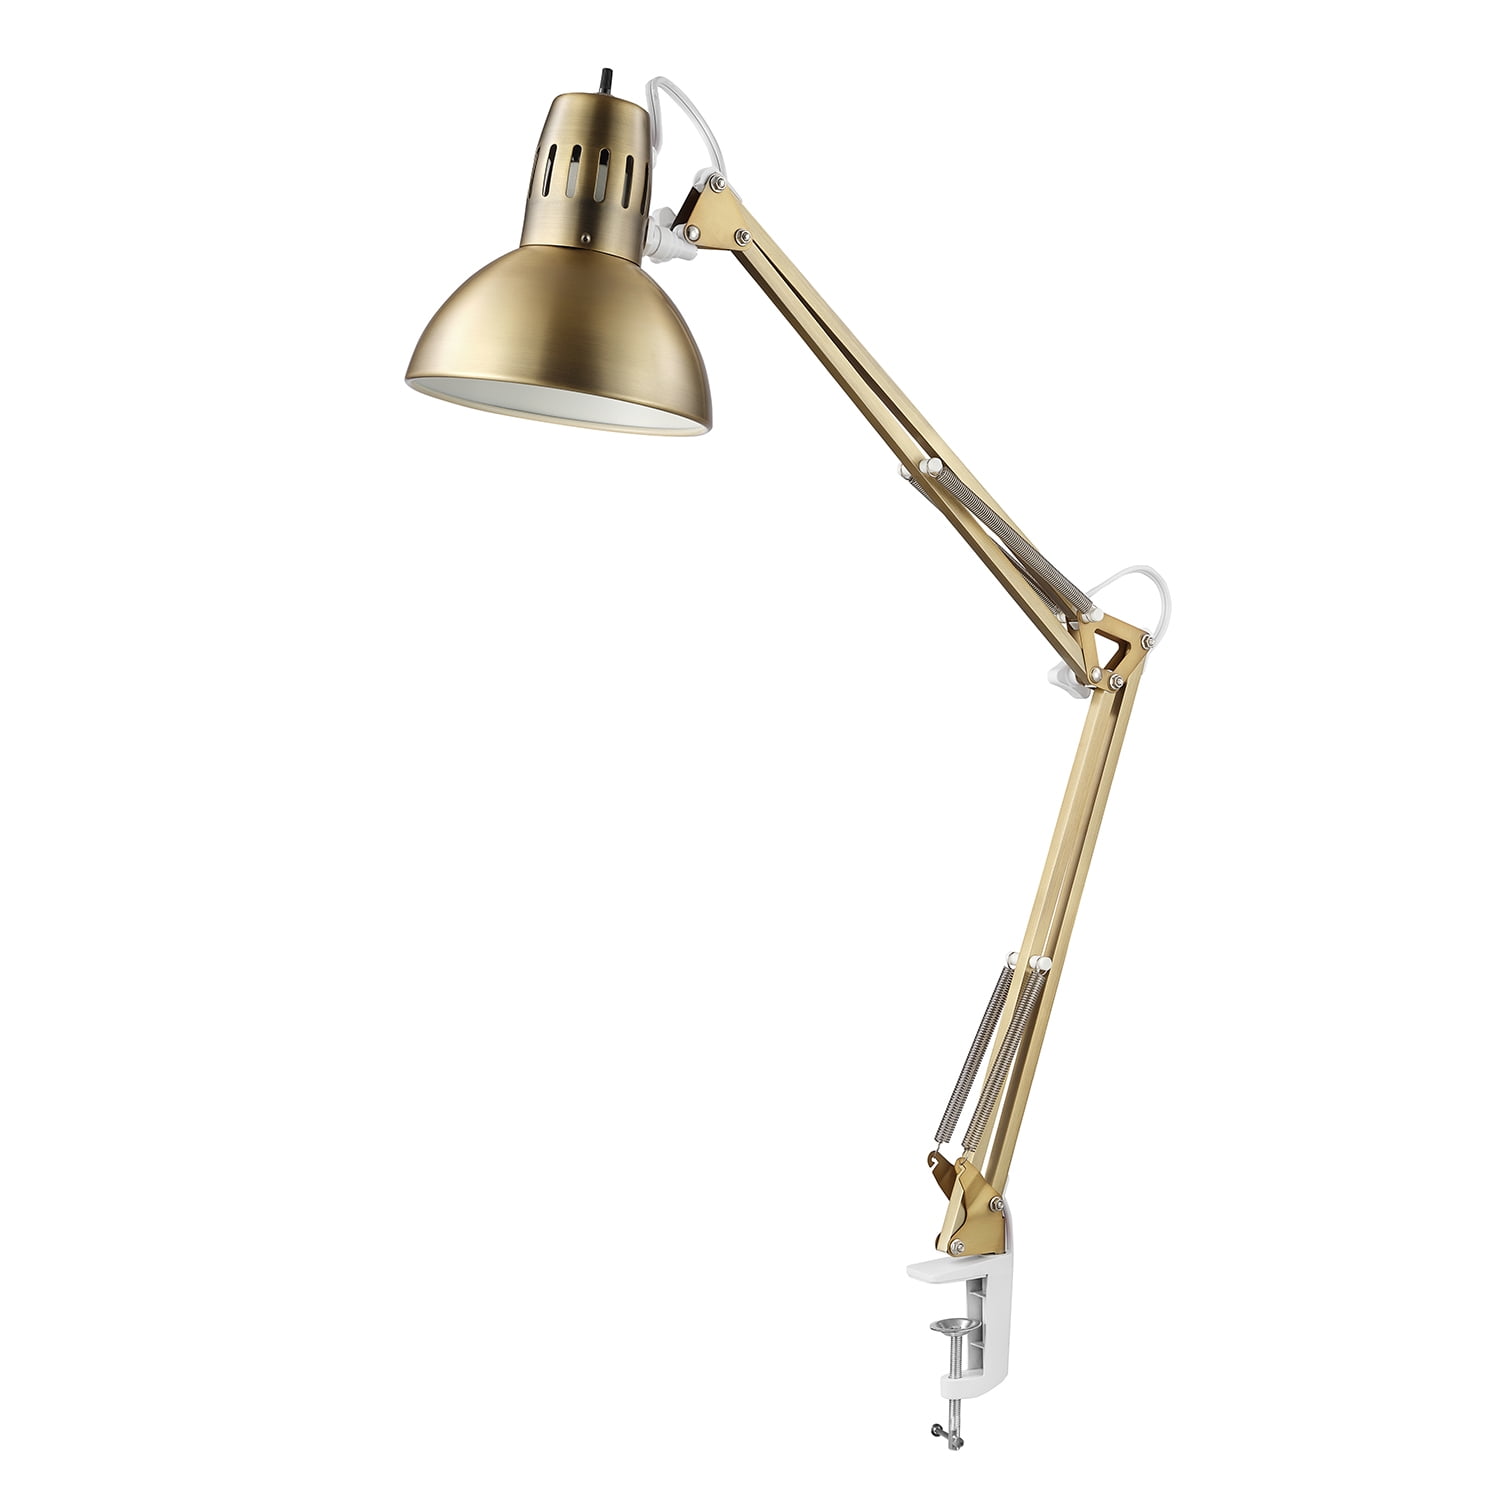 Vintage Brass Double Headed Goose Neck Lamp